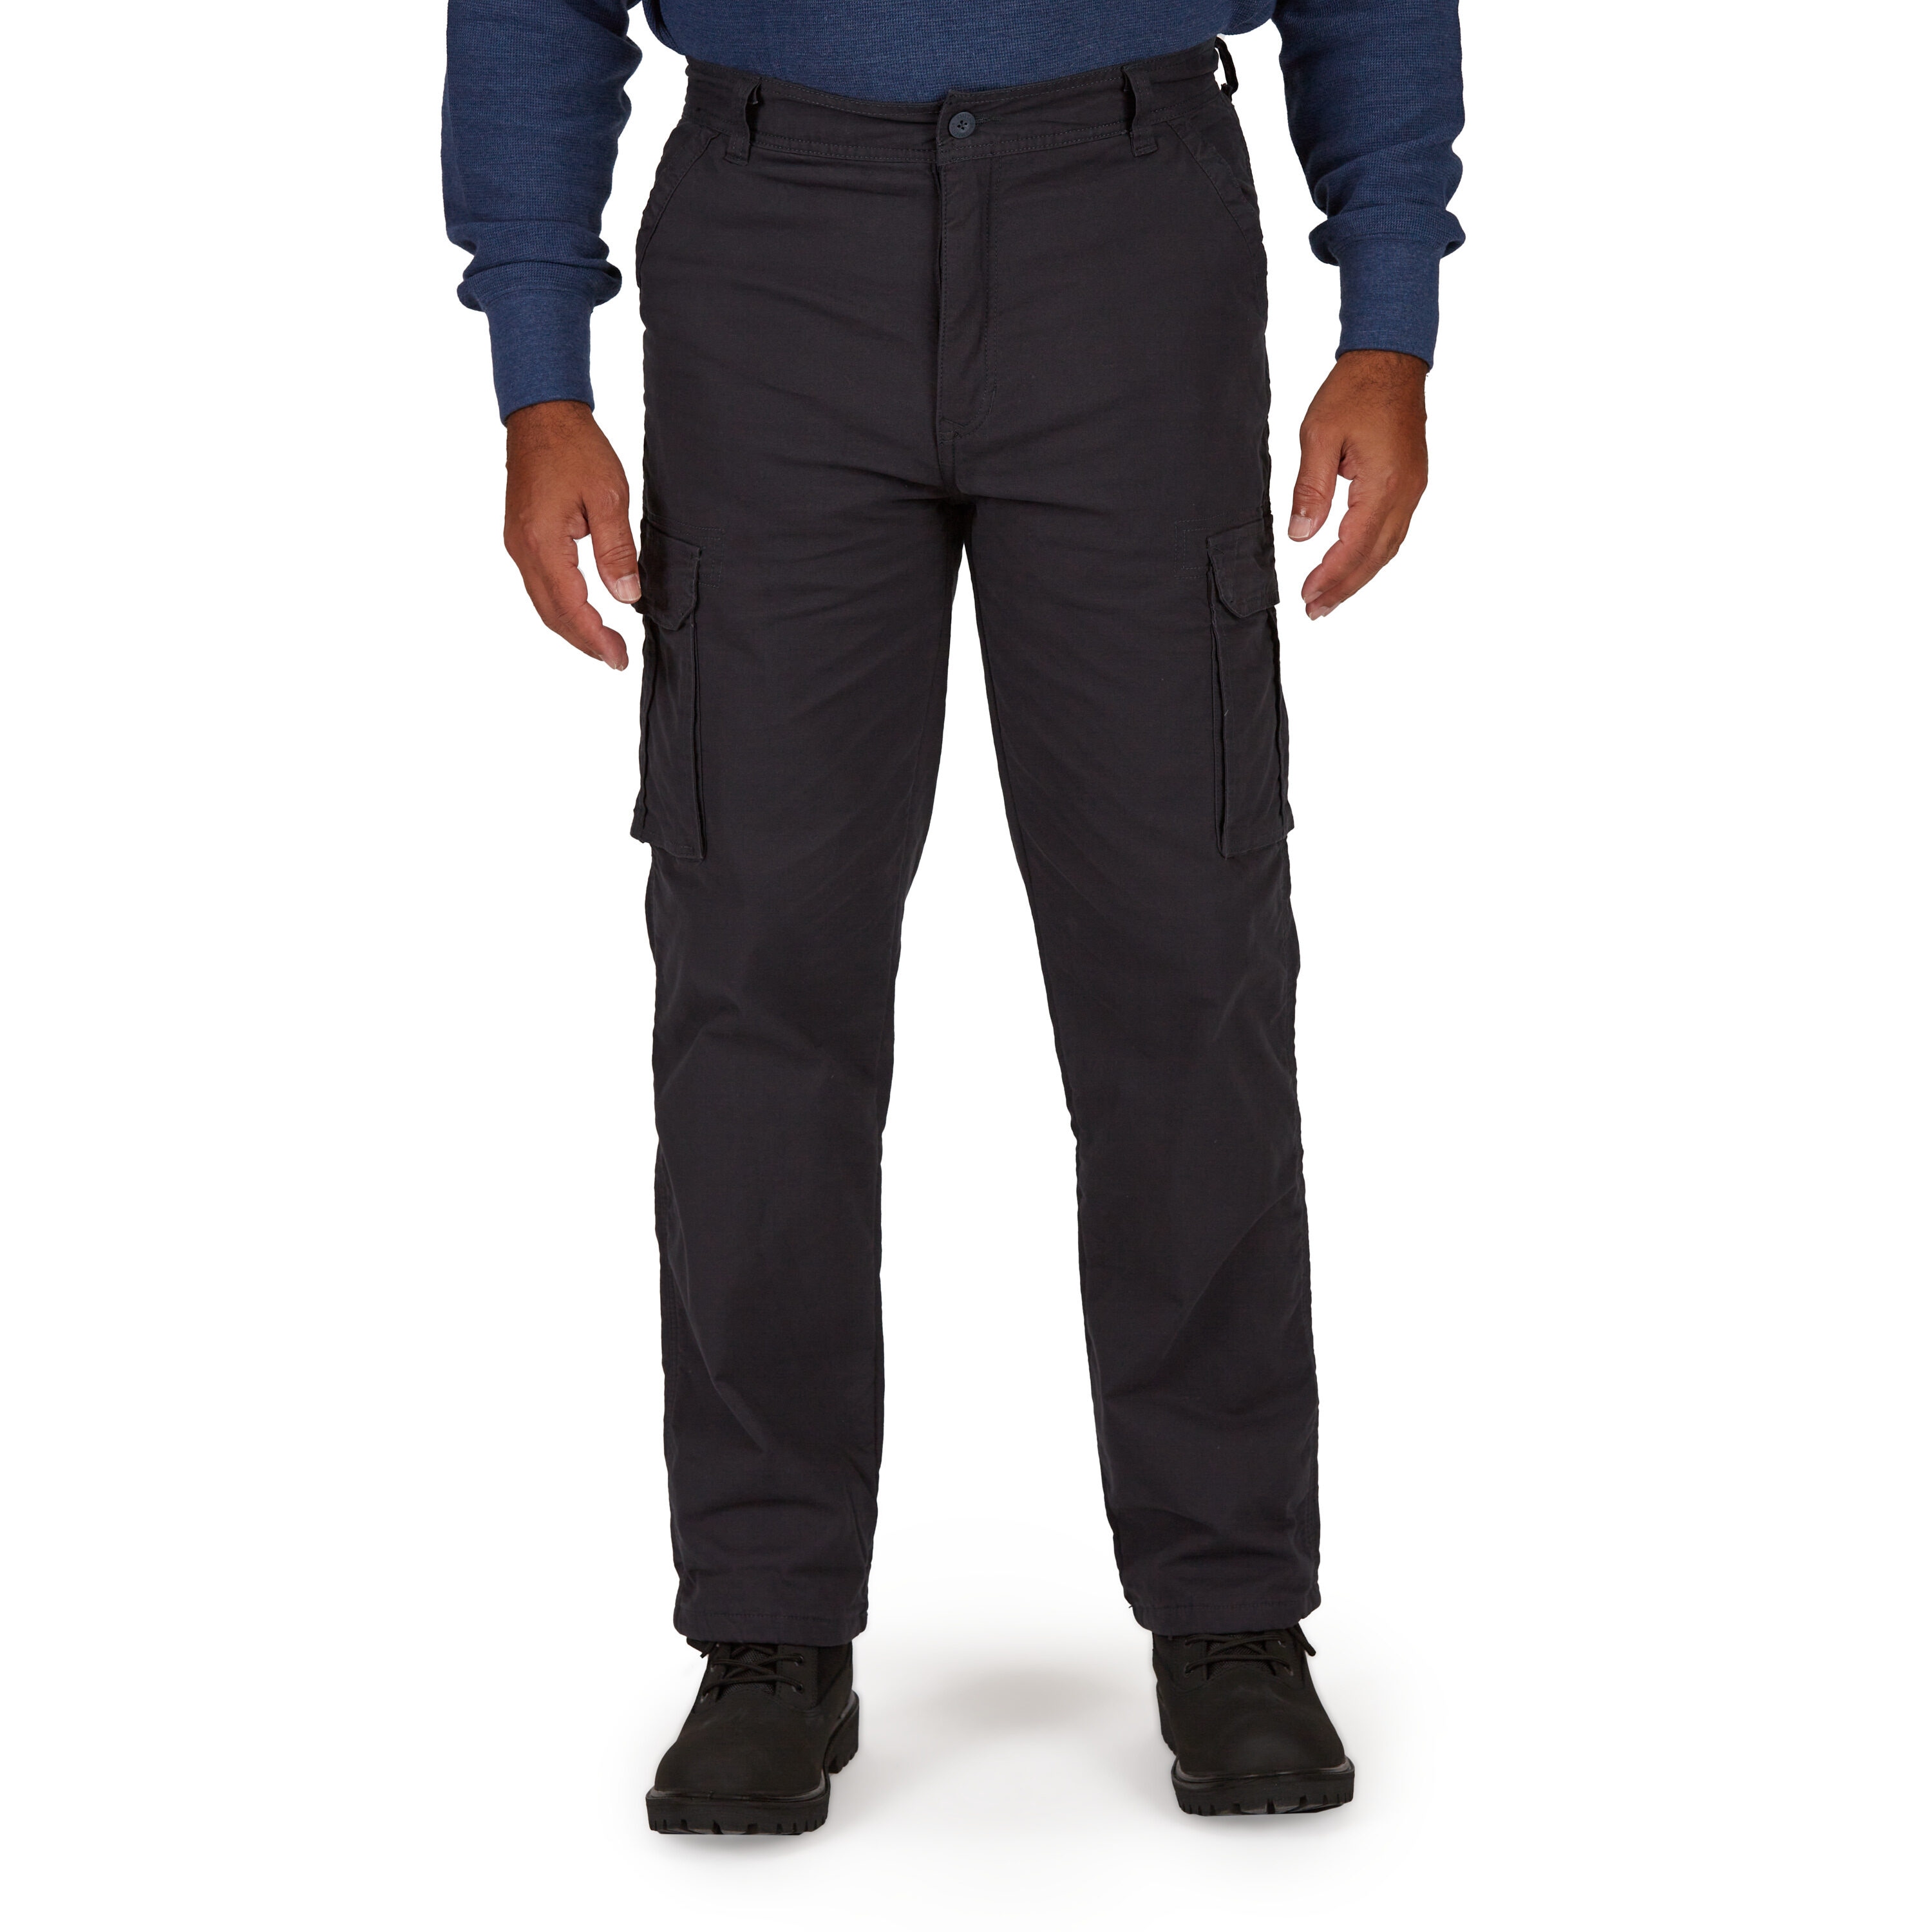 Men's Fire Hose Fleece-Lined Relaxed Fit Pants